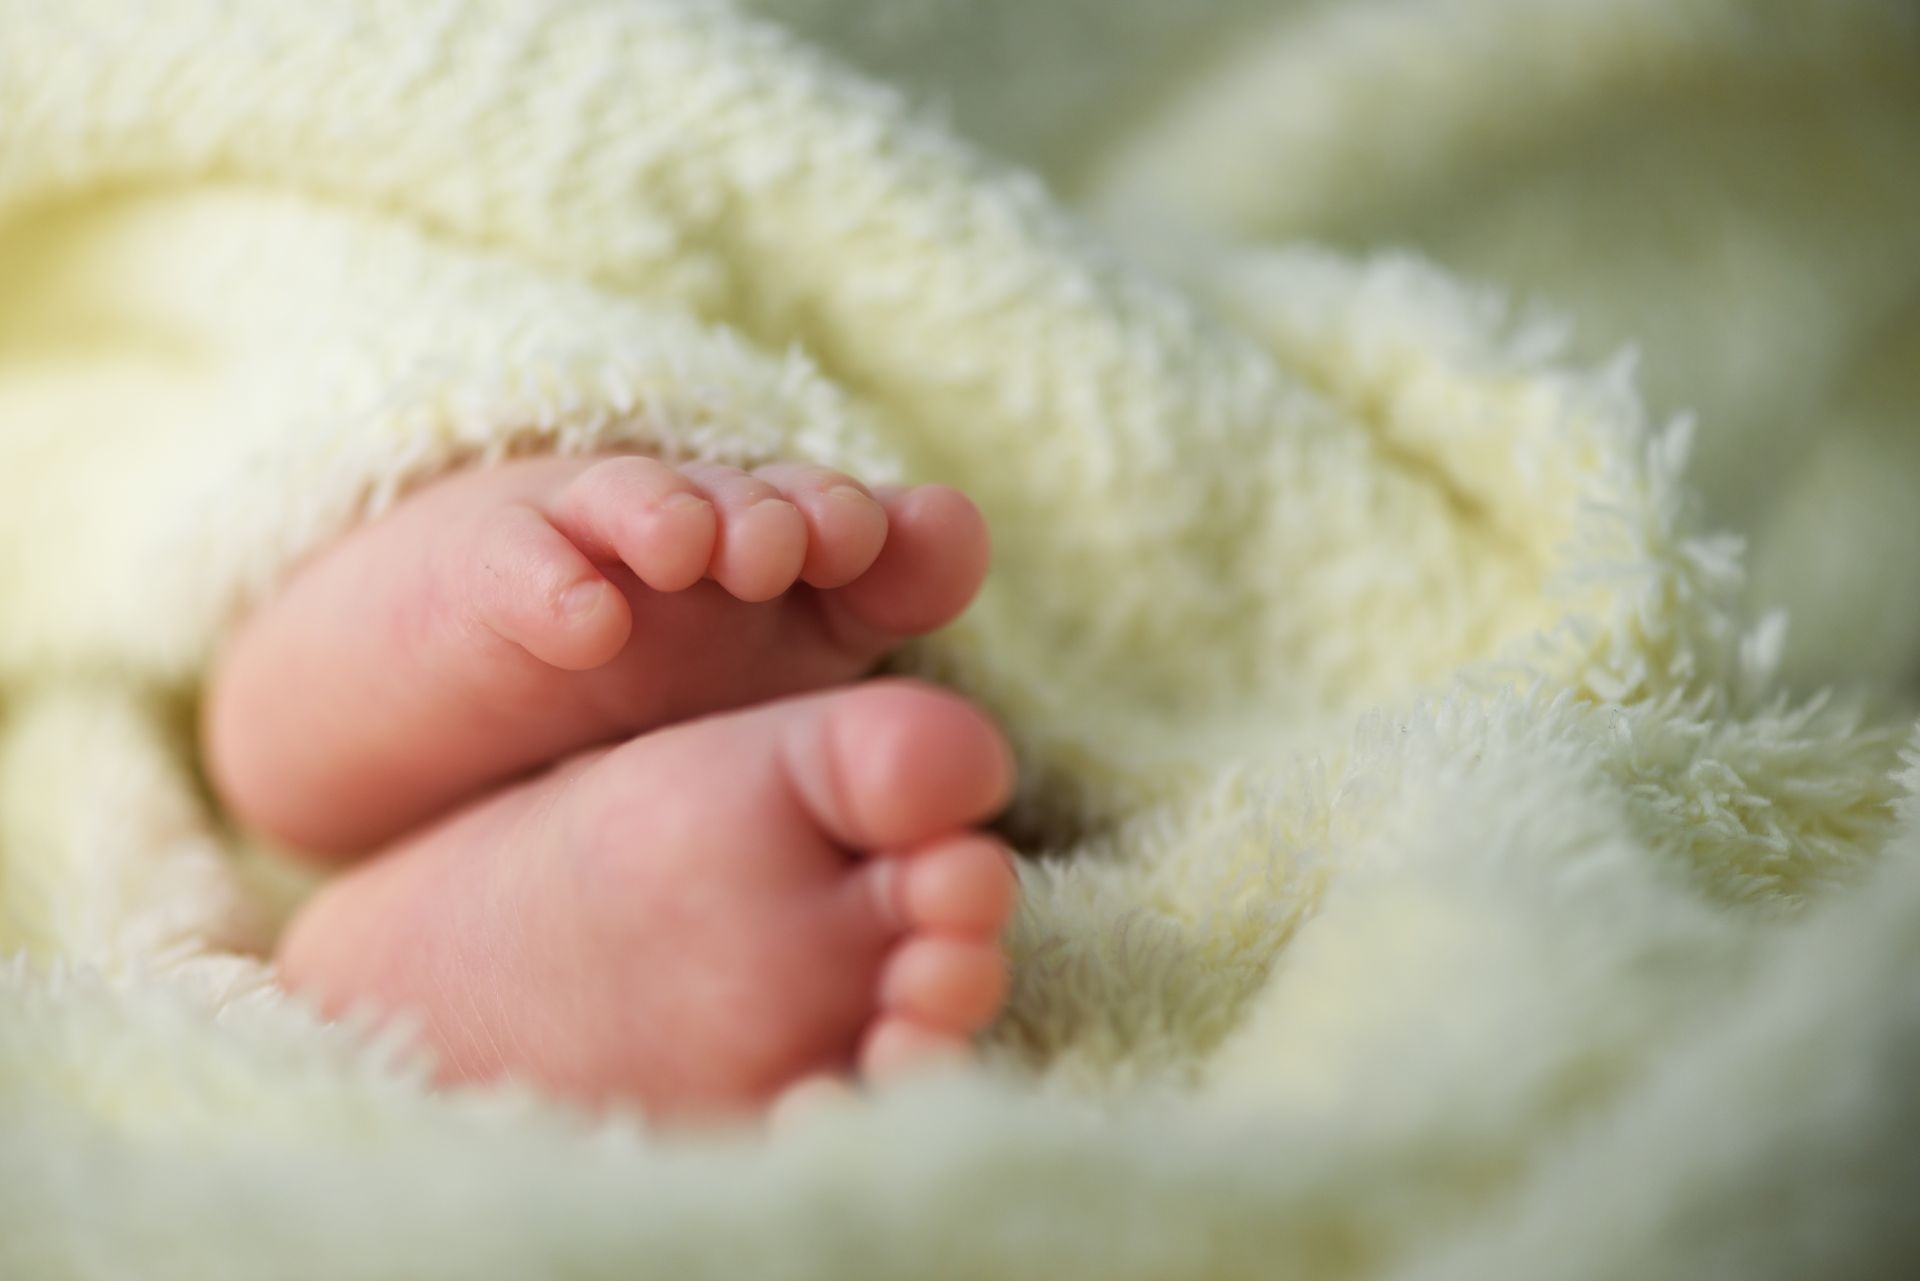 Newborn baby feet in a fluffy blanket closeup. Motherhood and new life concept